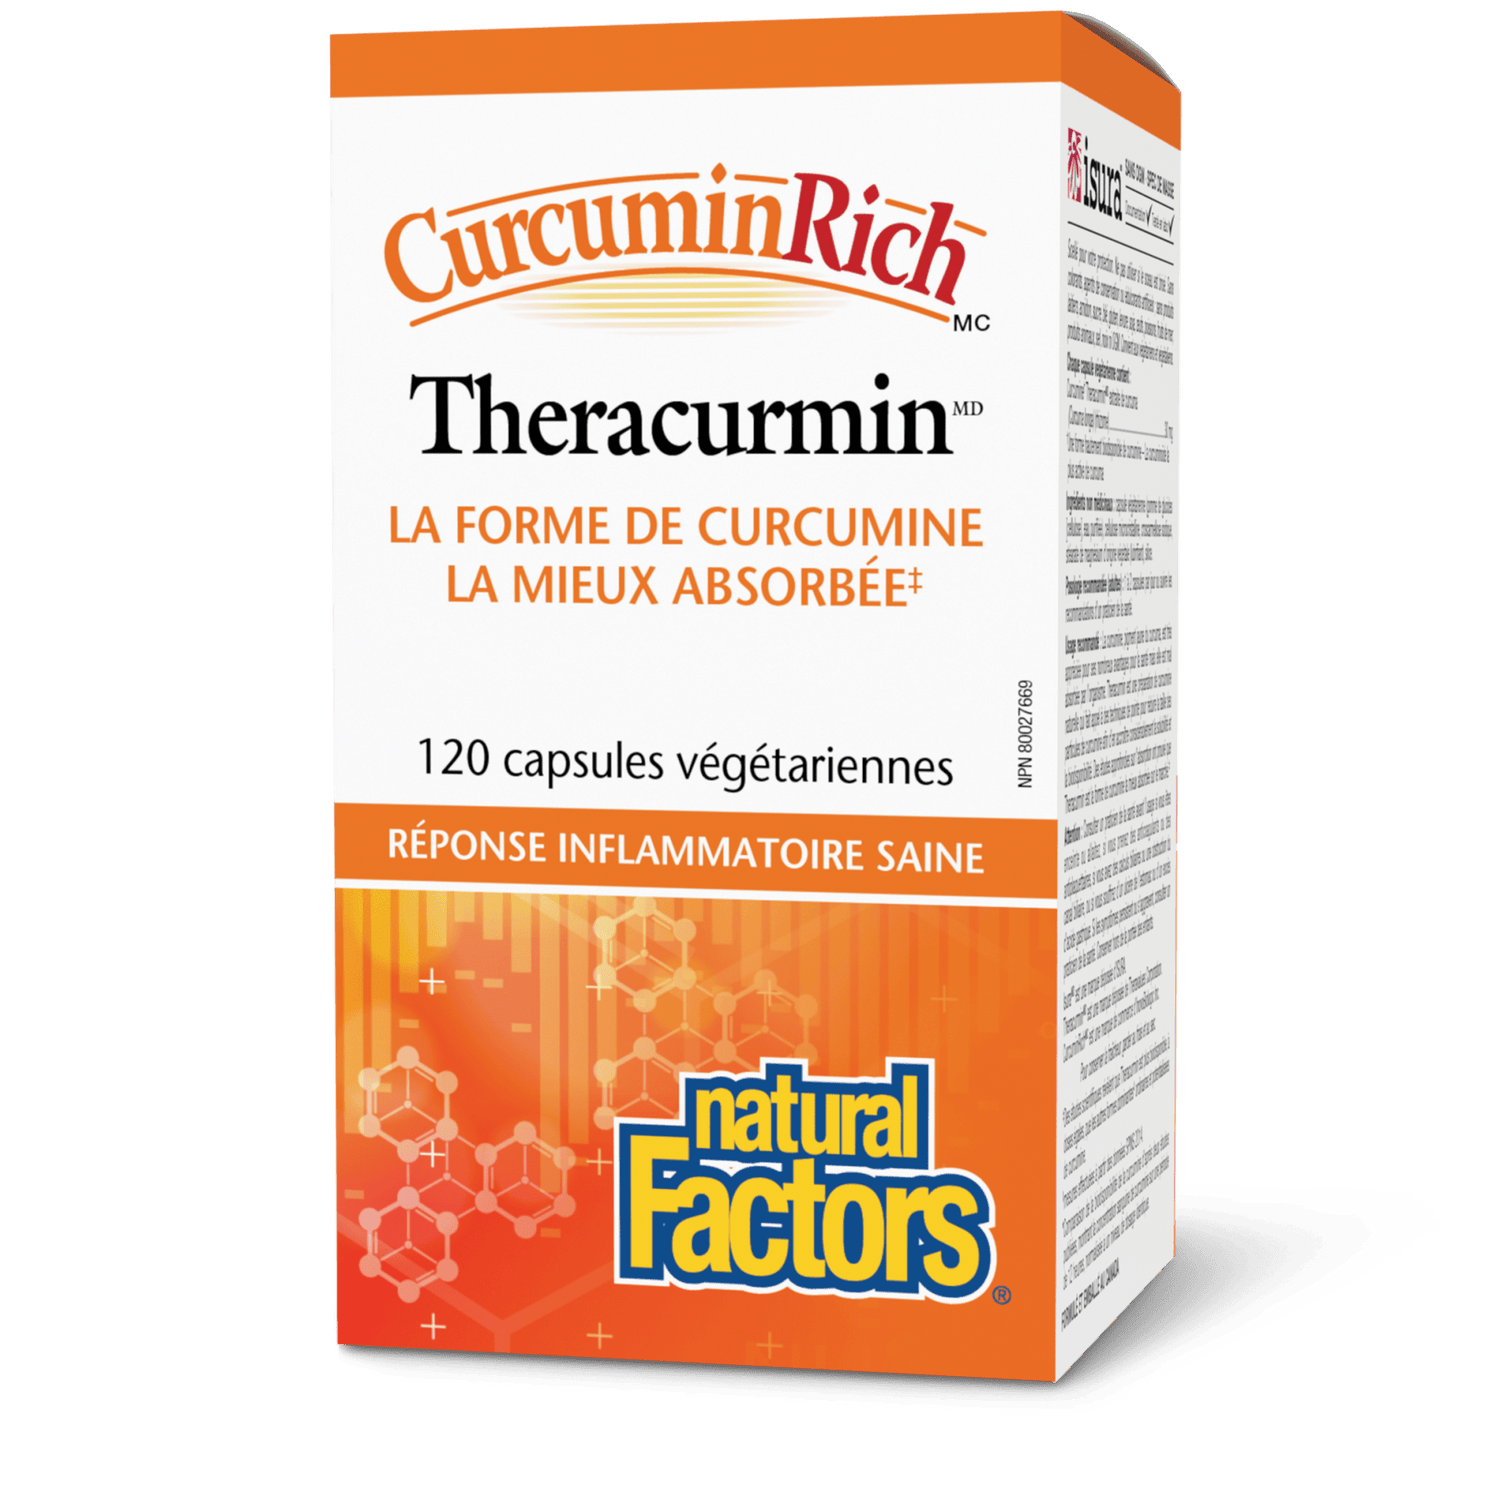 Theracurmin, CurcuminRich, Natural Factors|v|image|4539